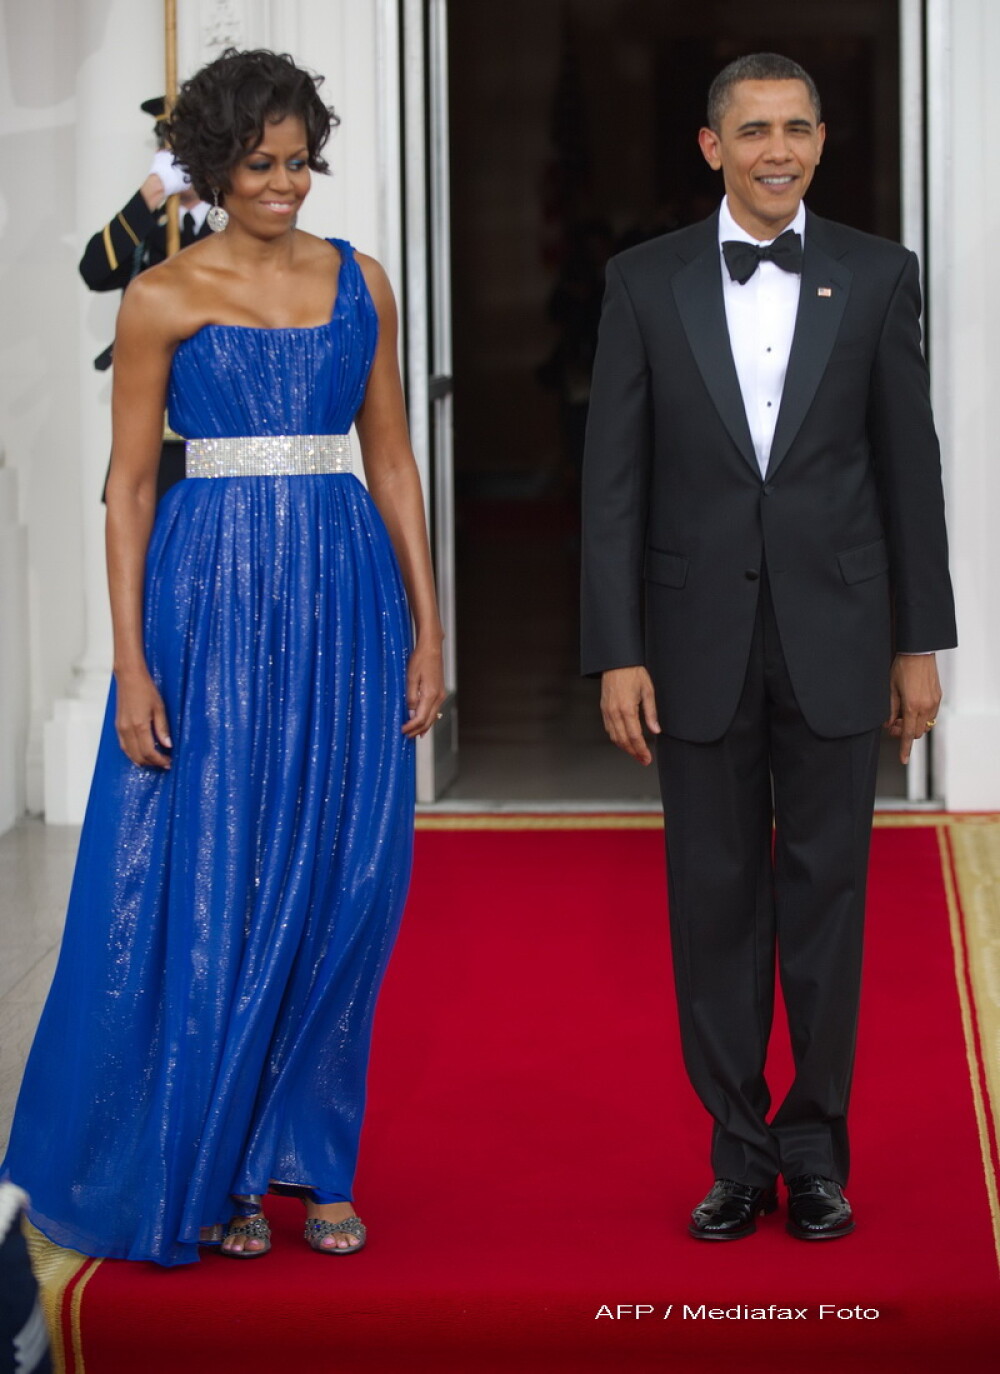 Eva Longoria si Michelle Obama au impresionat la dineul de la Casa Alba - Imaginea 4